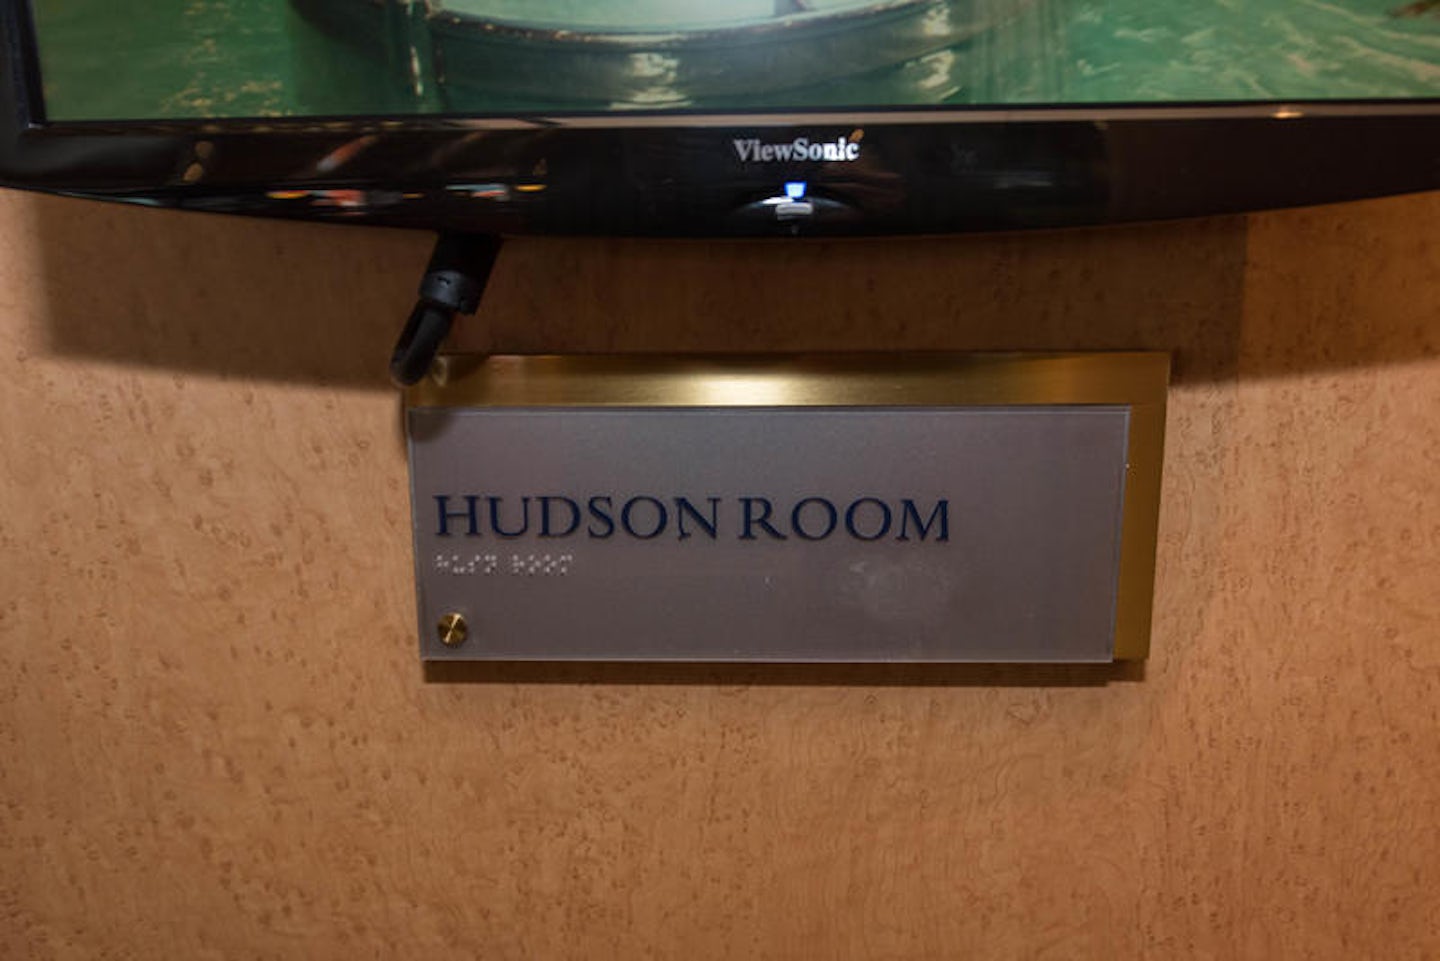 Hudson Room on Noordam